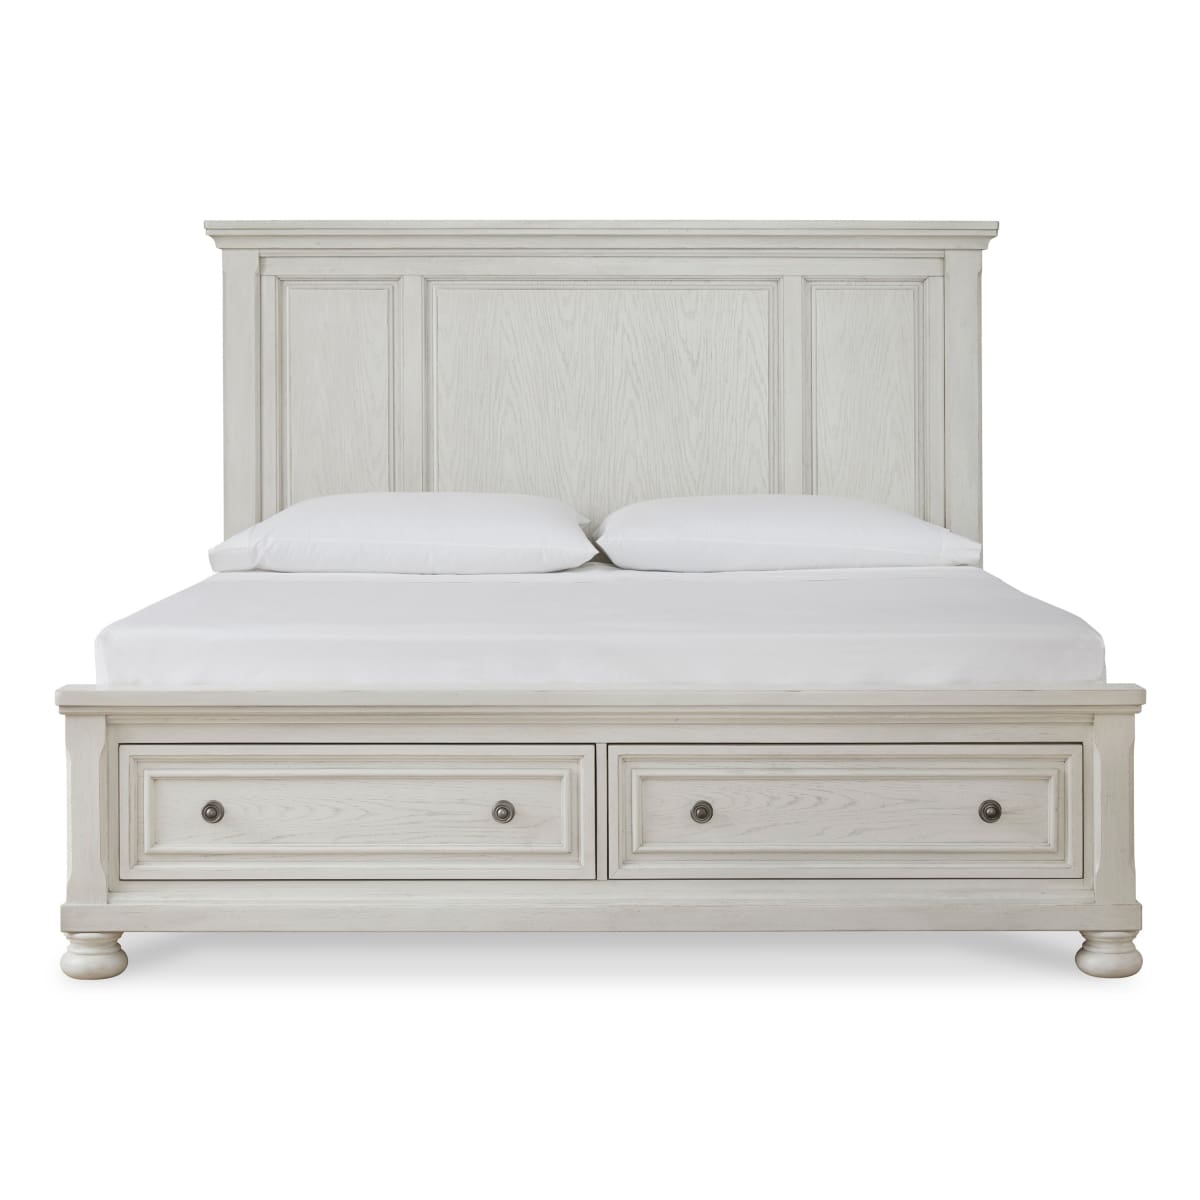 Robbinsdale King Panel Storage Bed - $1499.99 - bed